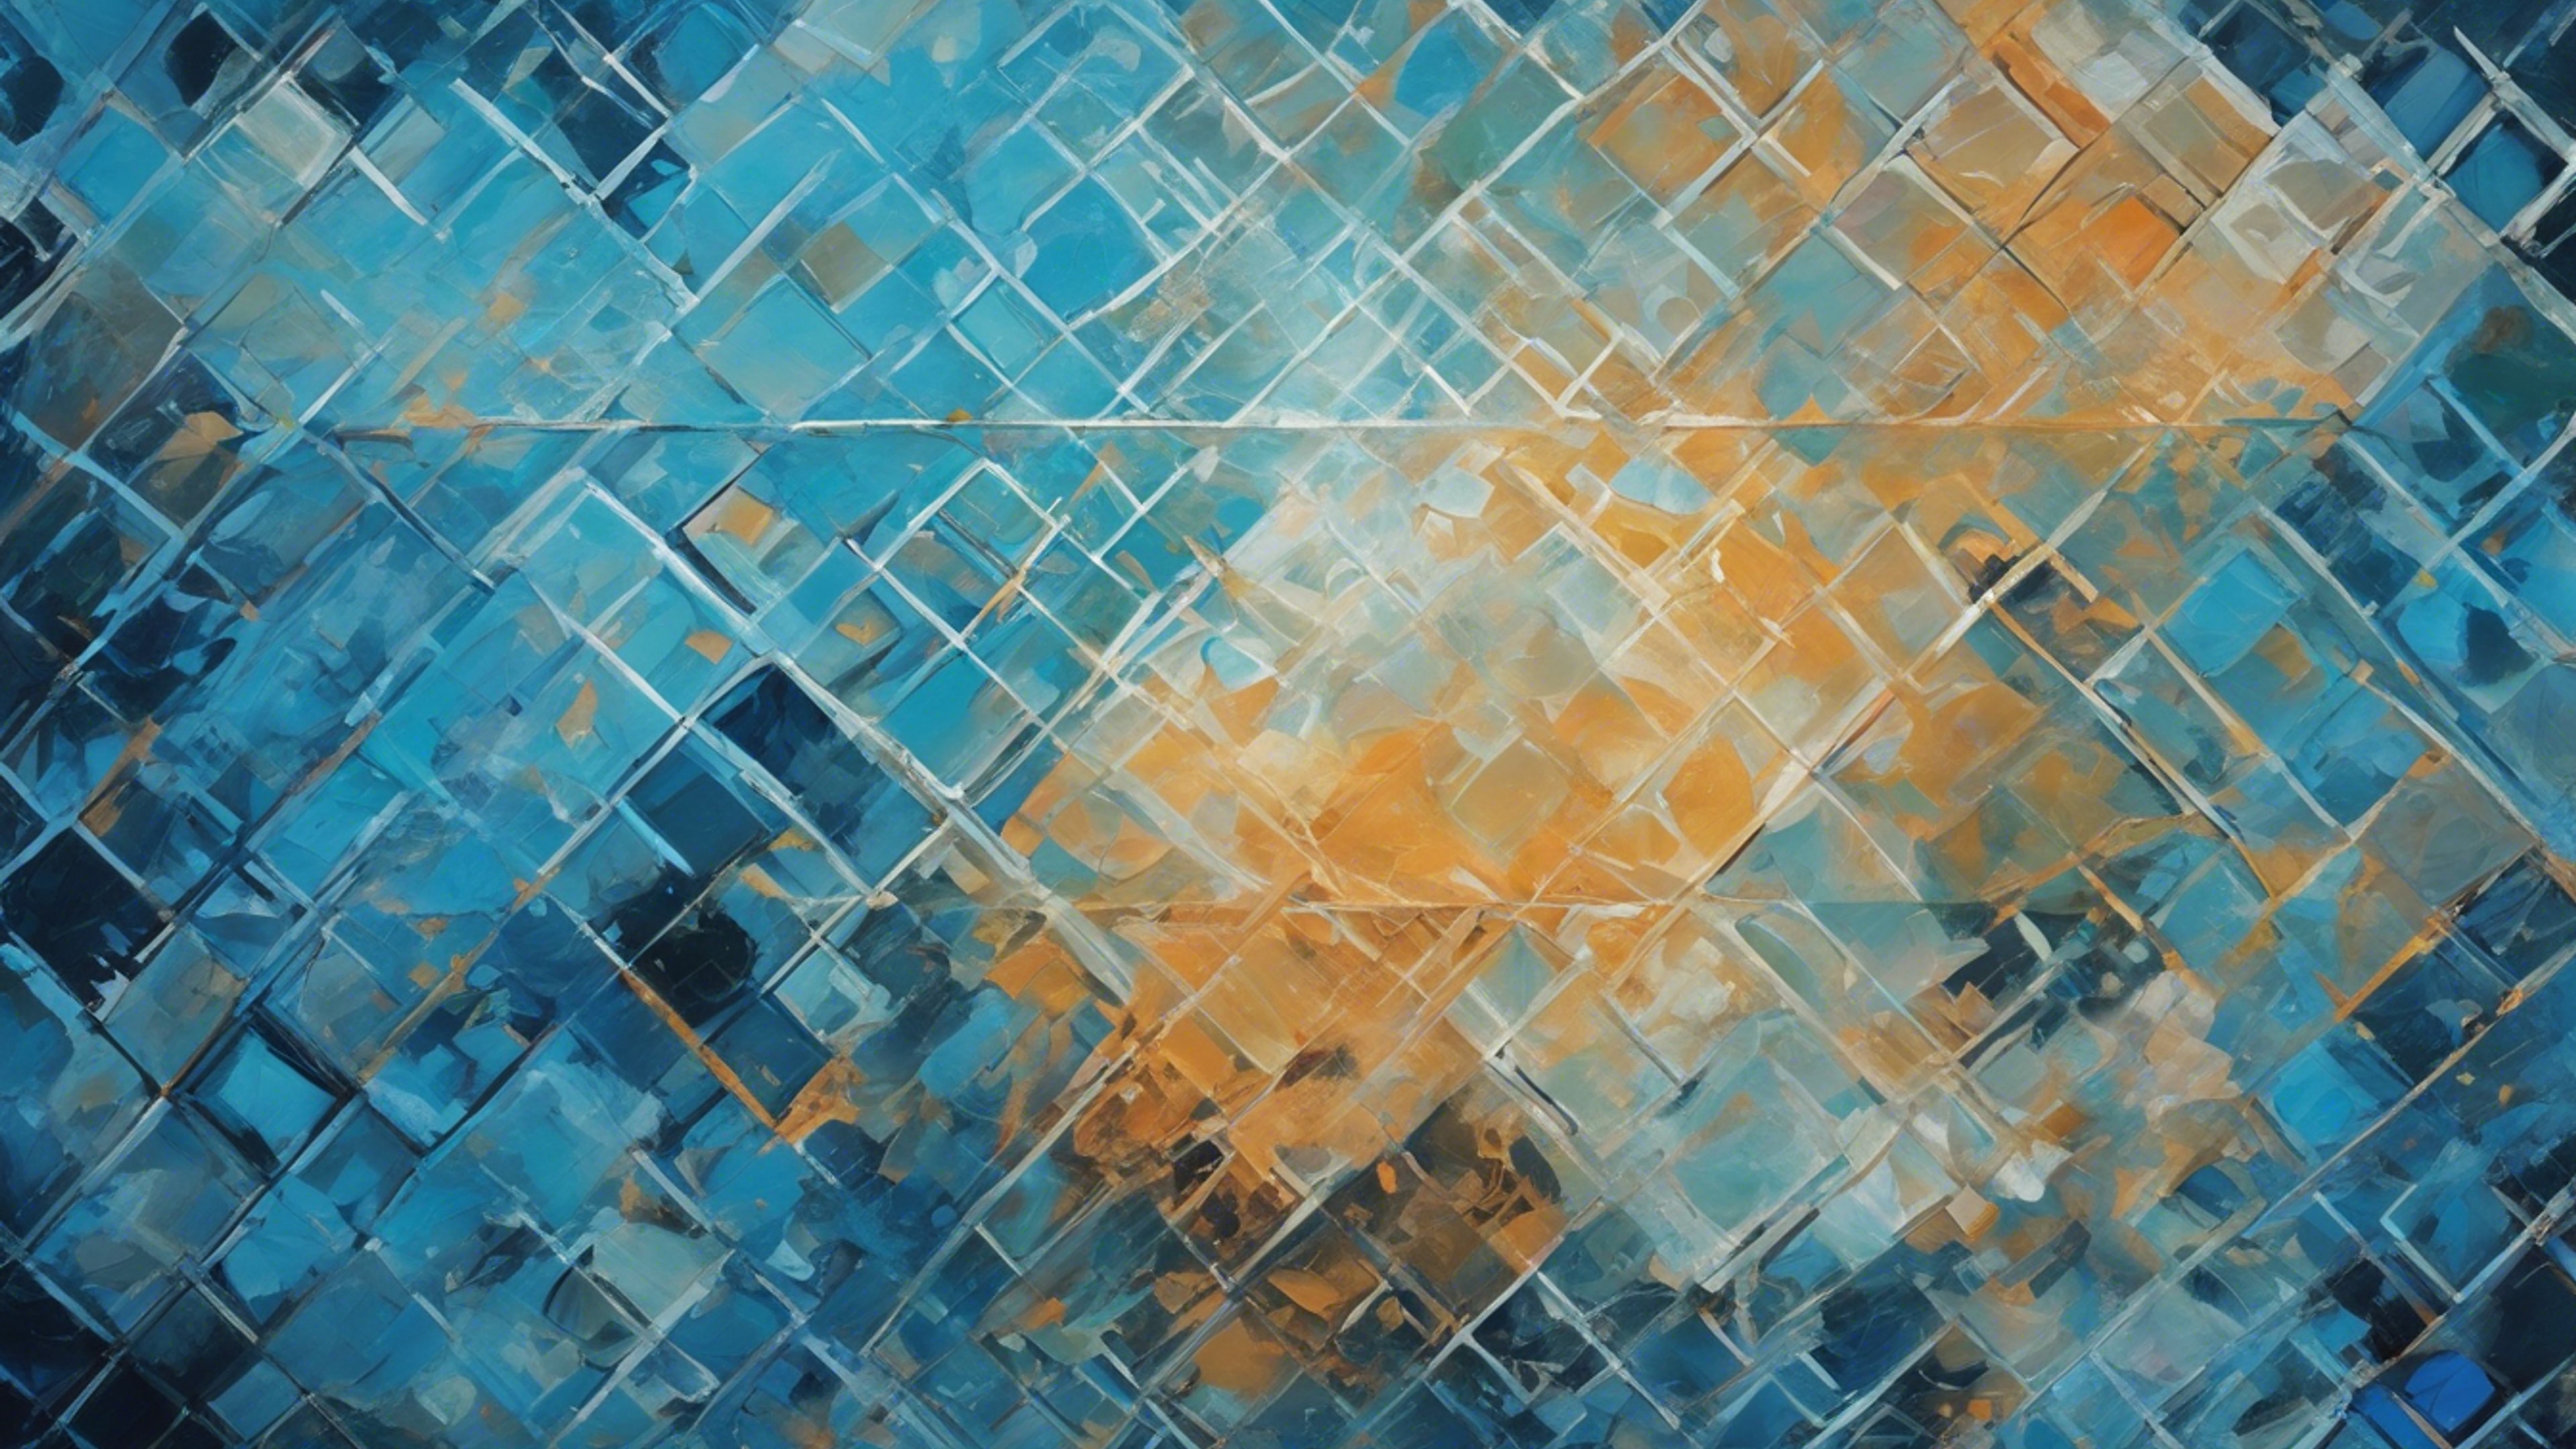 A cool blue geometric abstract painting壁紙[ac7eea7ca87f45839e46]